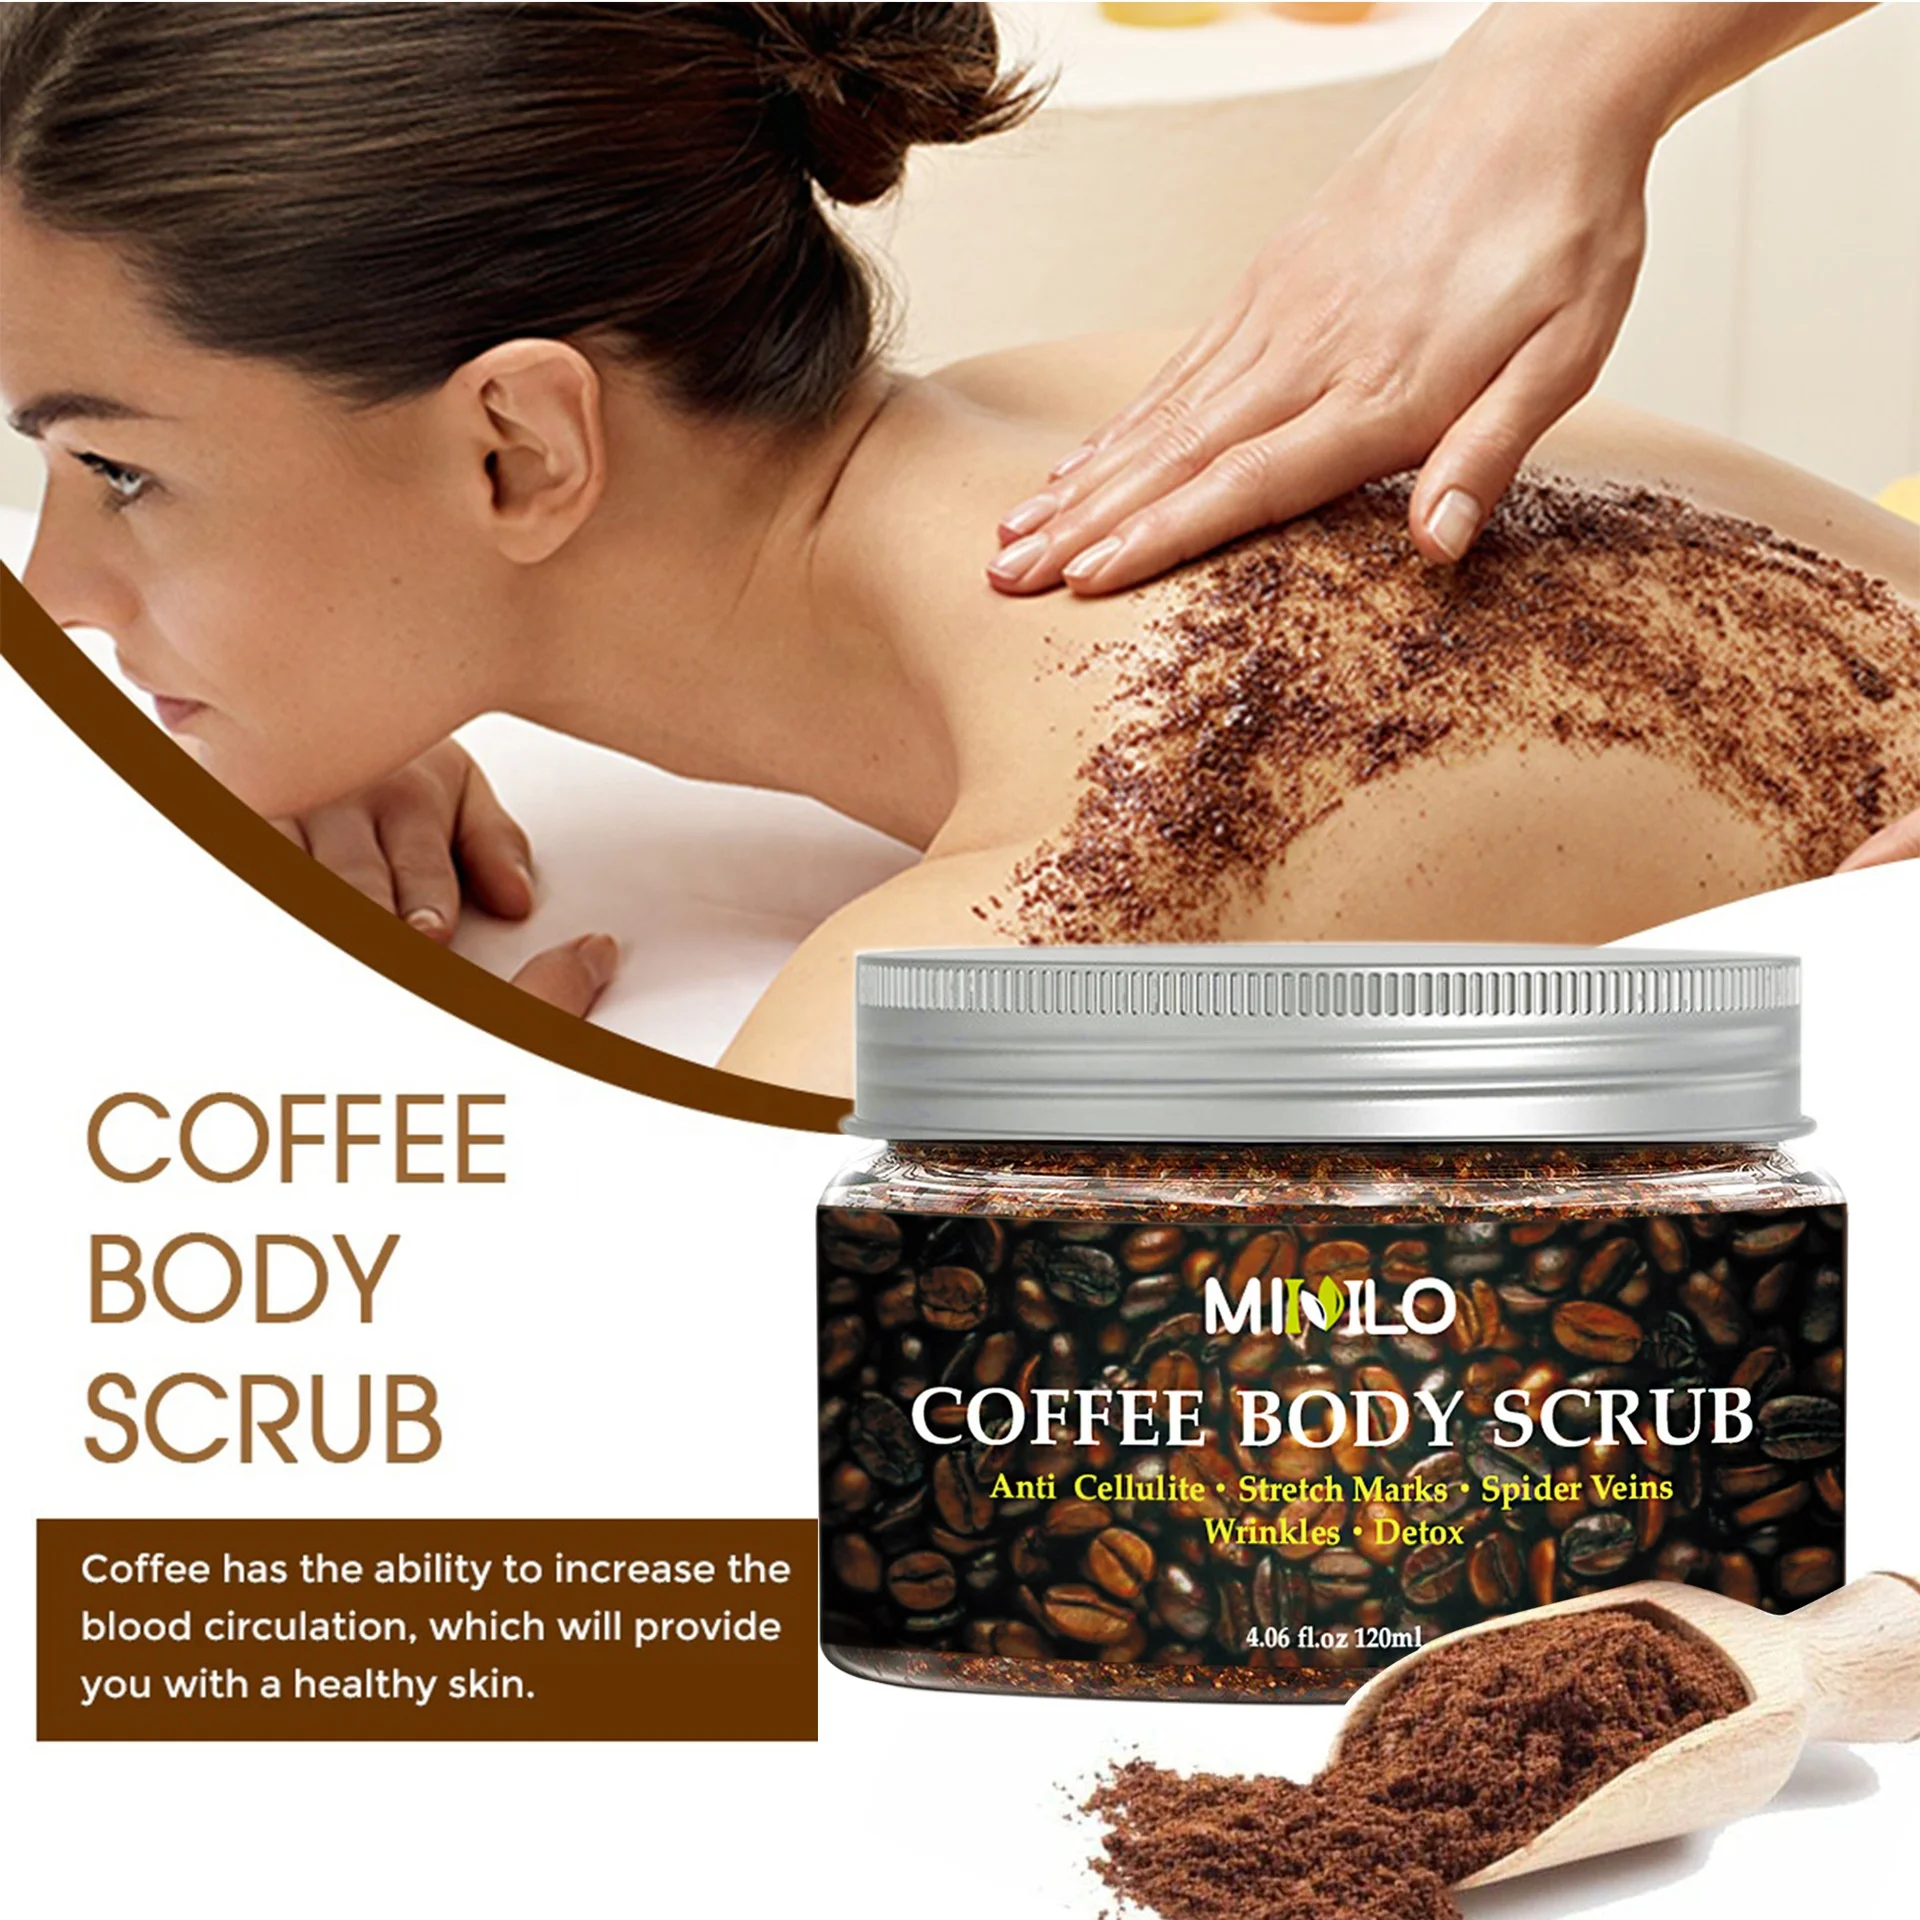 

Wholesale Private Label Natural Organic Arabica Sugar Coffee Body Scrub Exfoliator for Face and Body Exfoliating Anti Cellulite